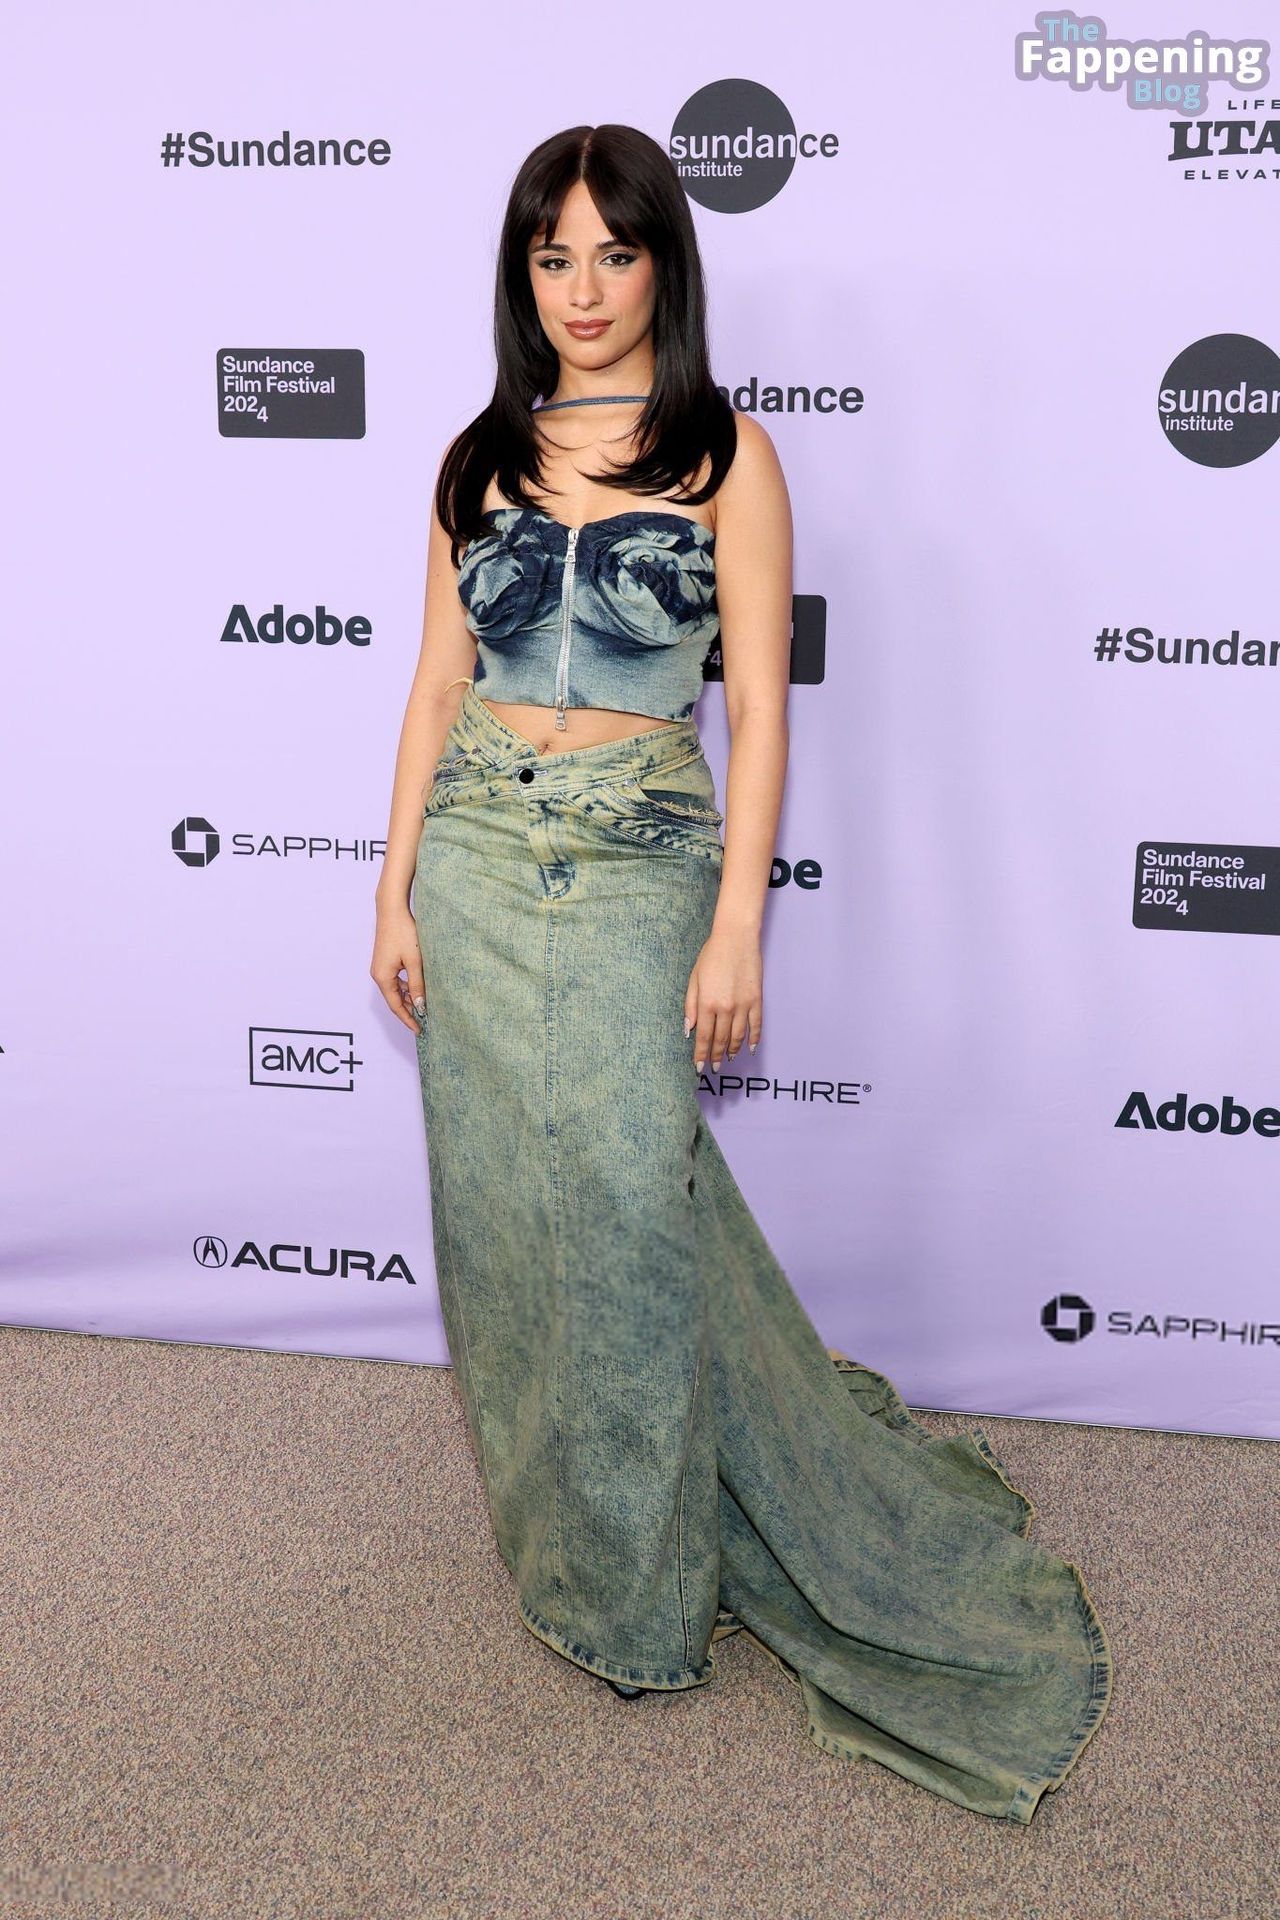 Camila-Cabello-Sundance-Rob-Peace-Premiere-Curves-12-thefappeningblog.com_.jpg